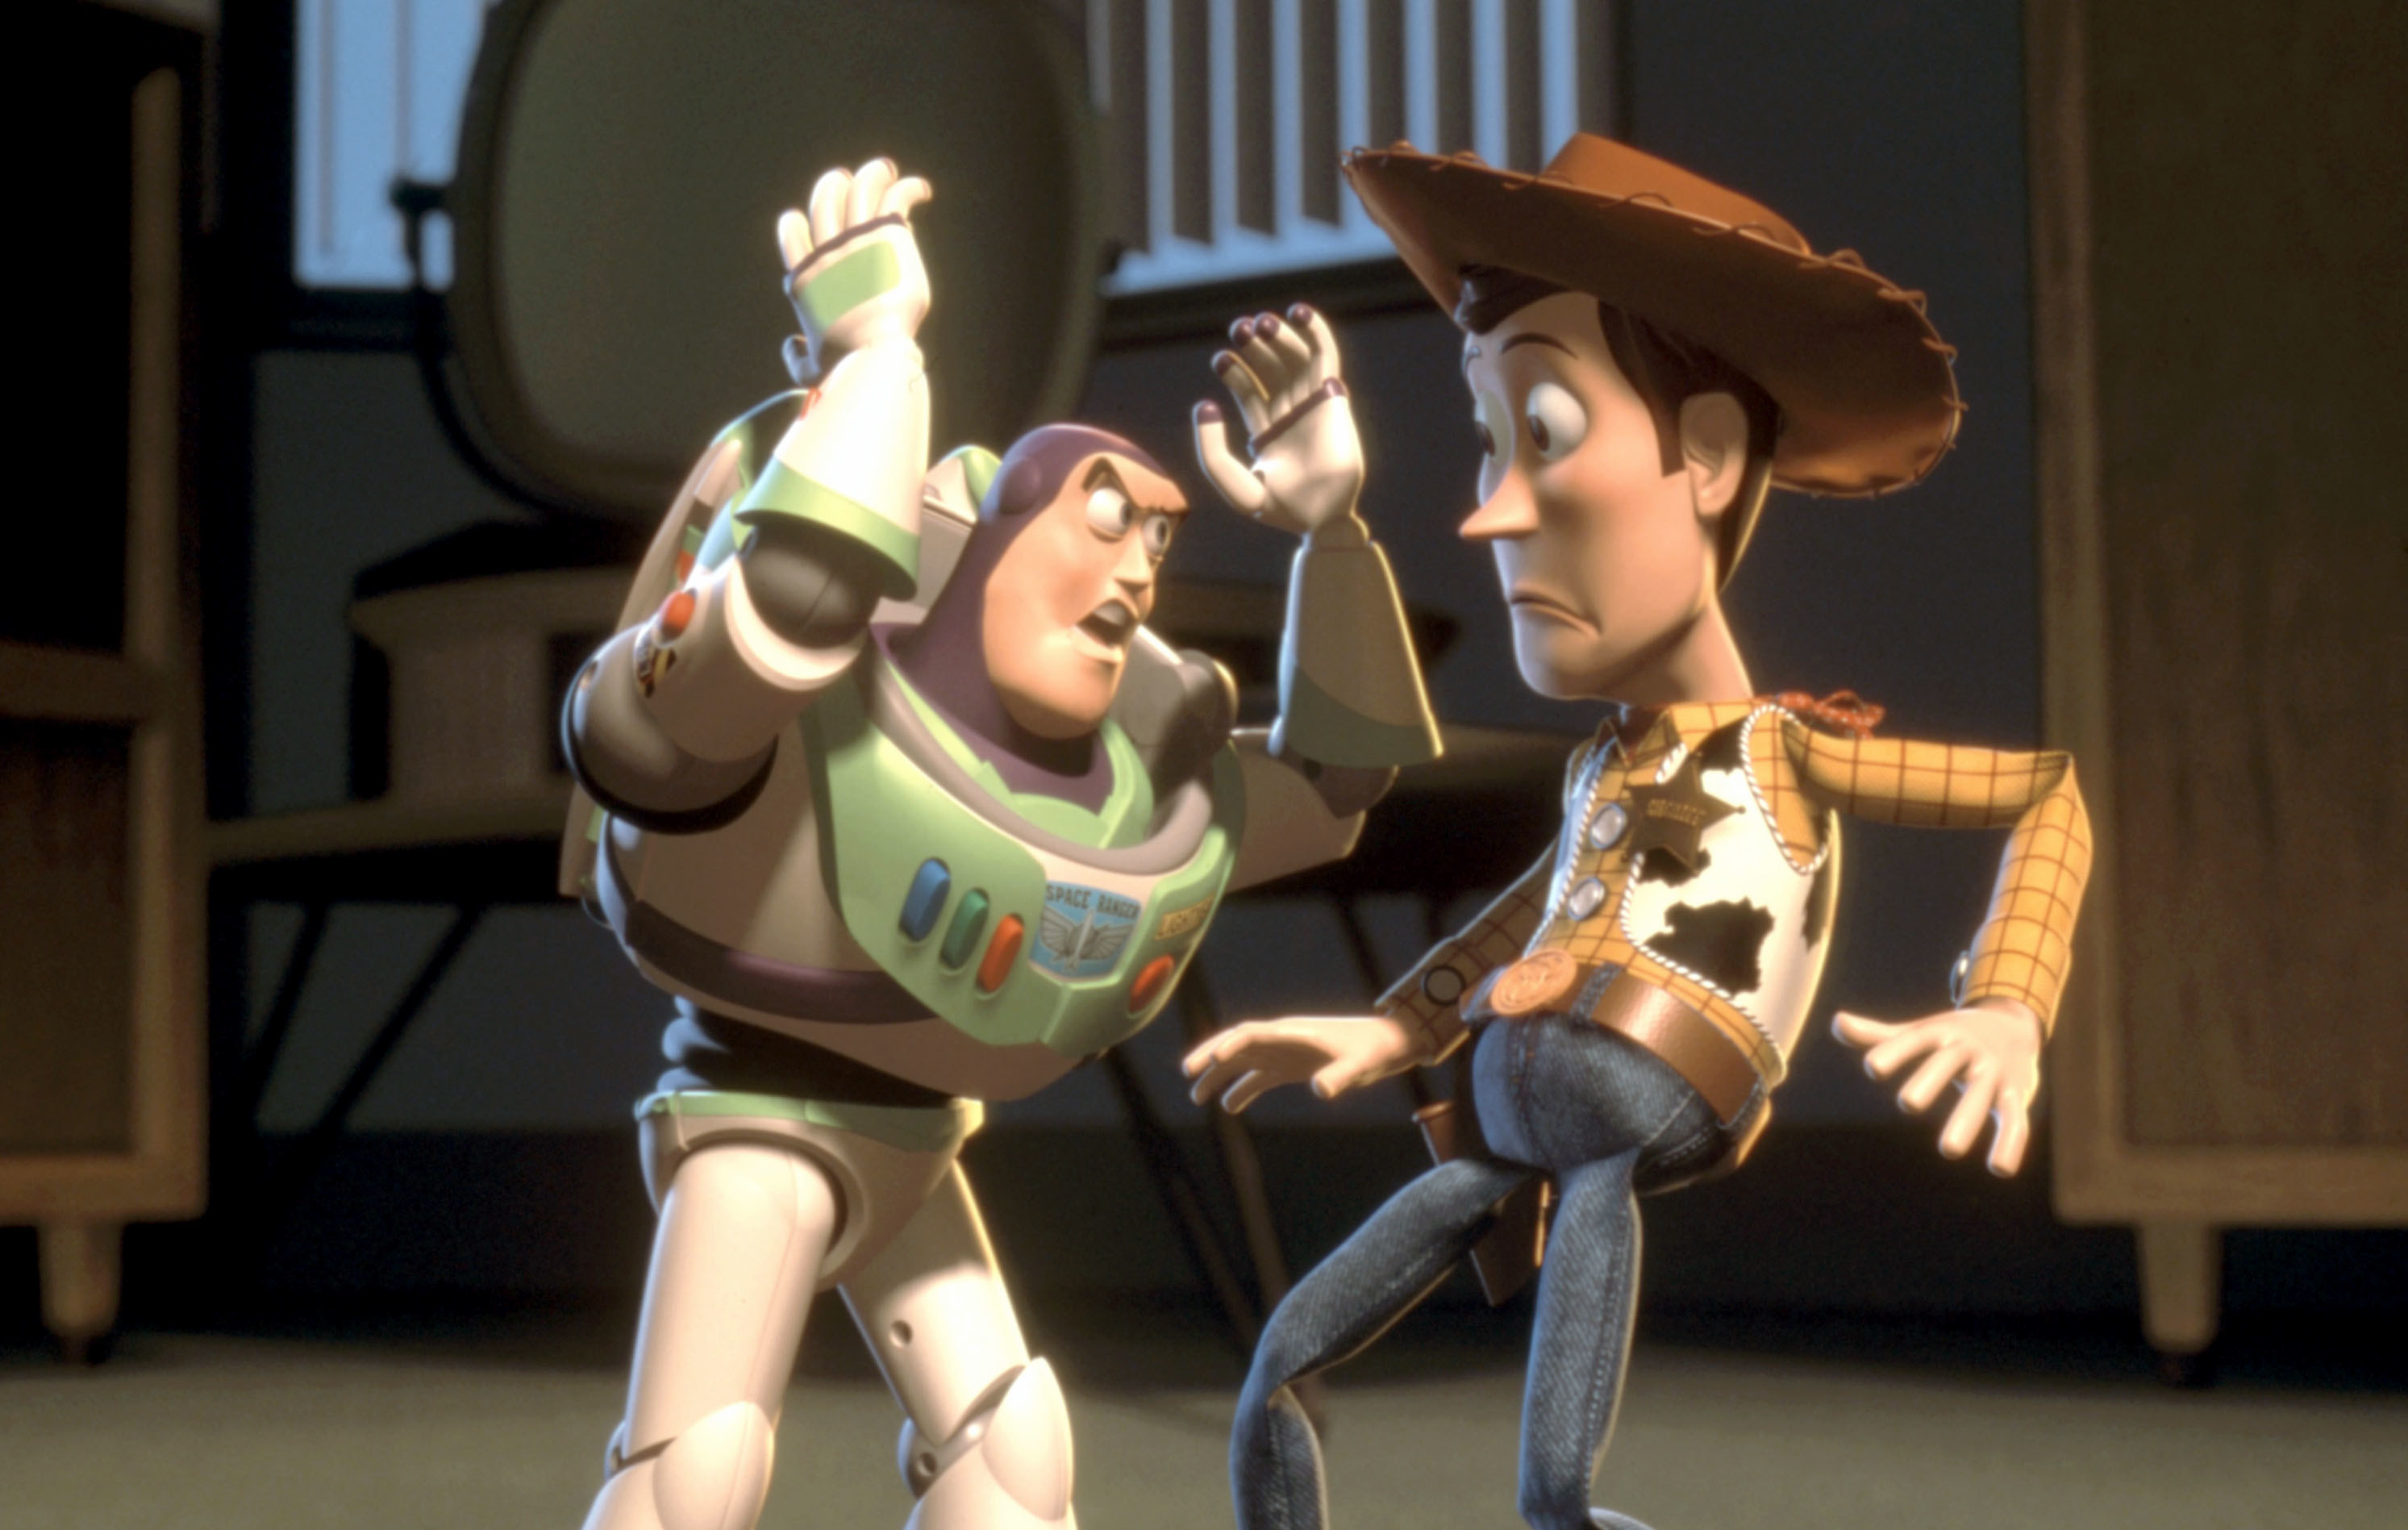 Buzz yelling at Woody